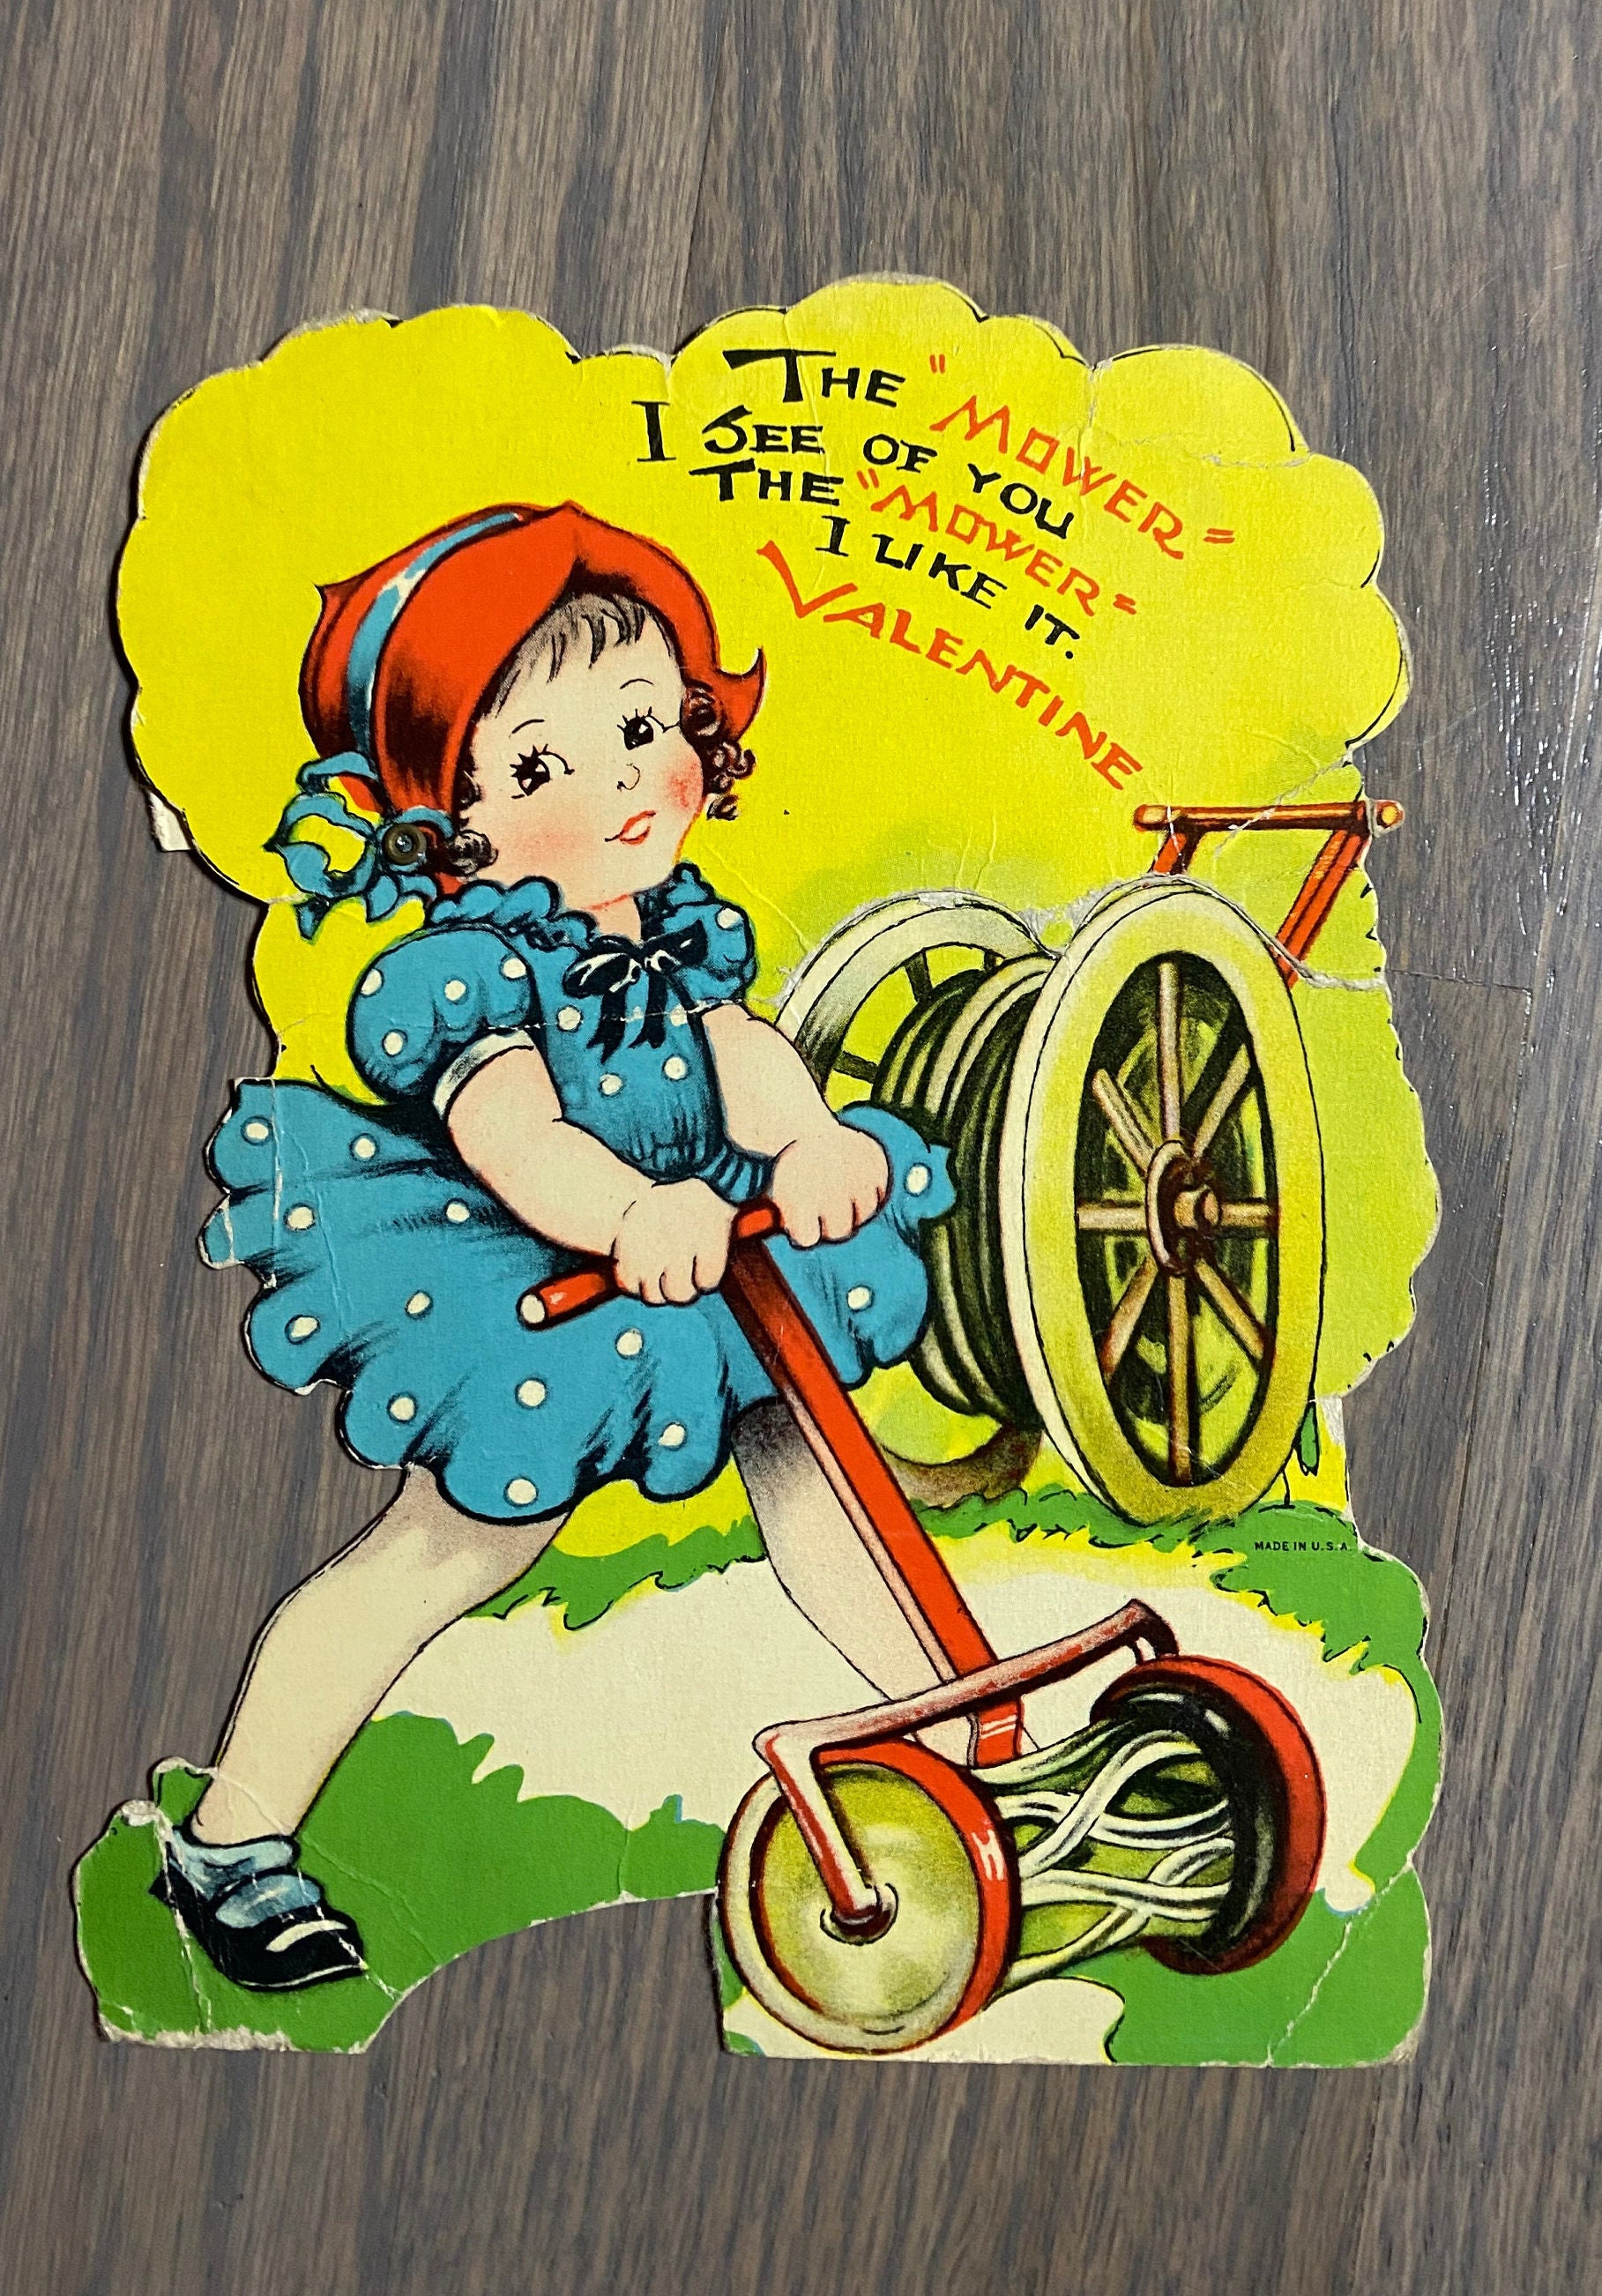 vintage Valentine's Day card circa 1930s – 86 Vintage